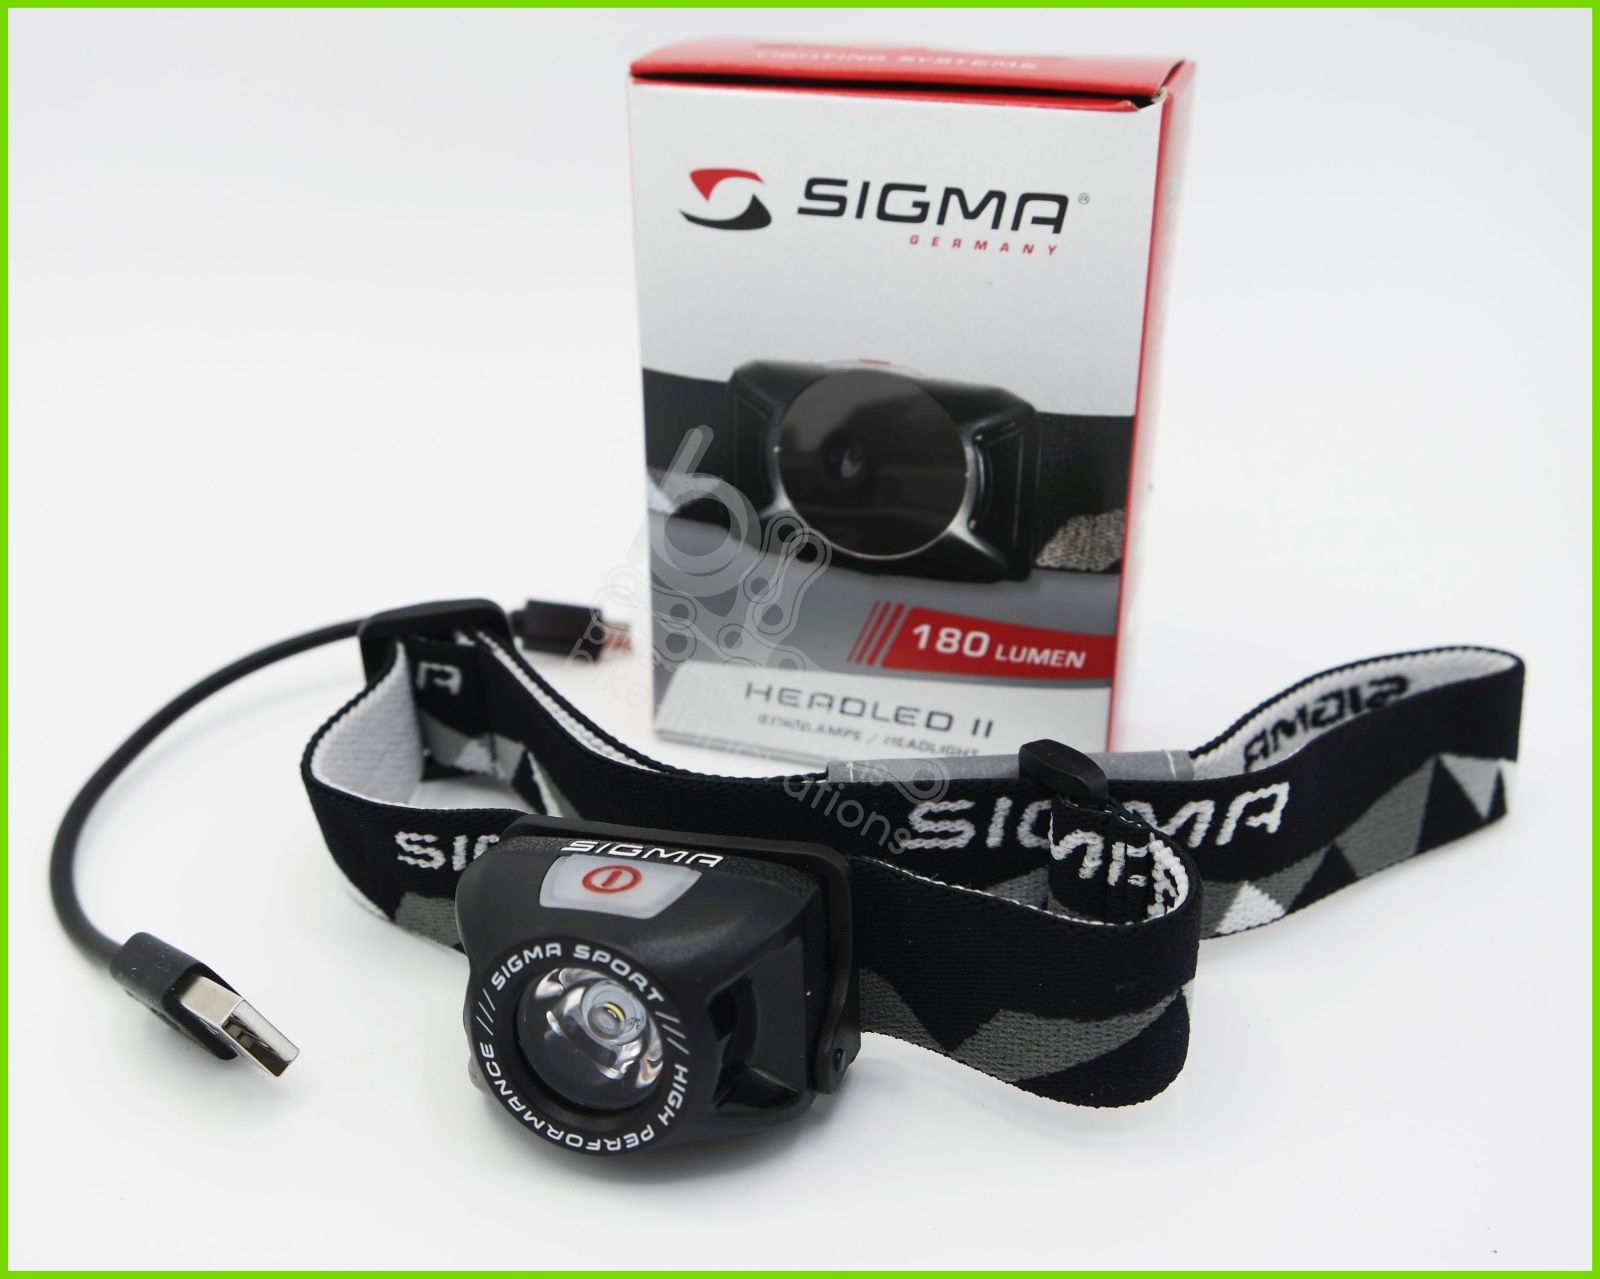 Sigma Sport Headled II Stirnlampe Headlight 180 Lumen Beleuchtung |  Beleuchtung | Elektronik | bike-innovations - Mit Leidenschaft vorwärts!